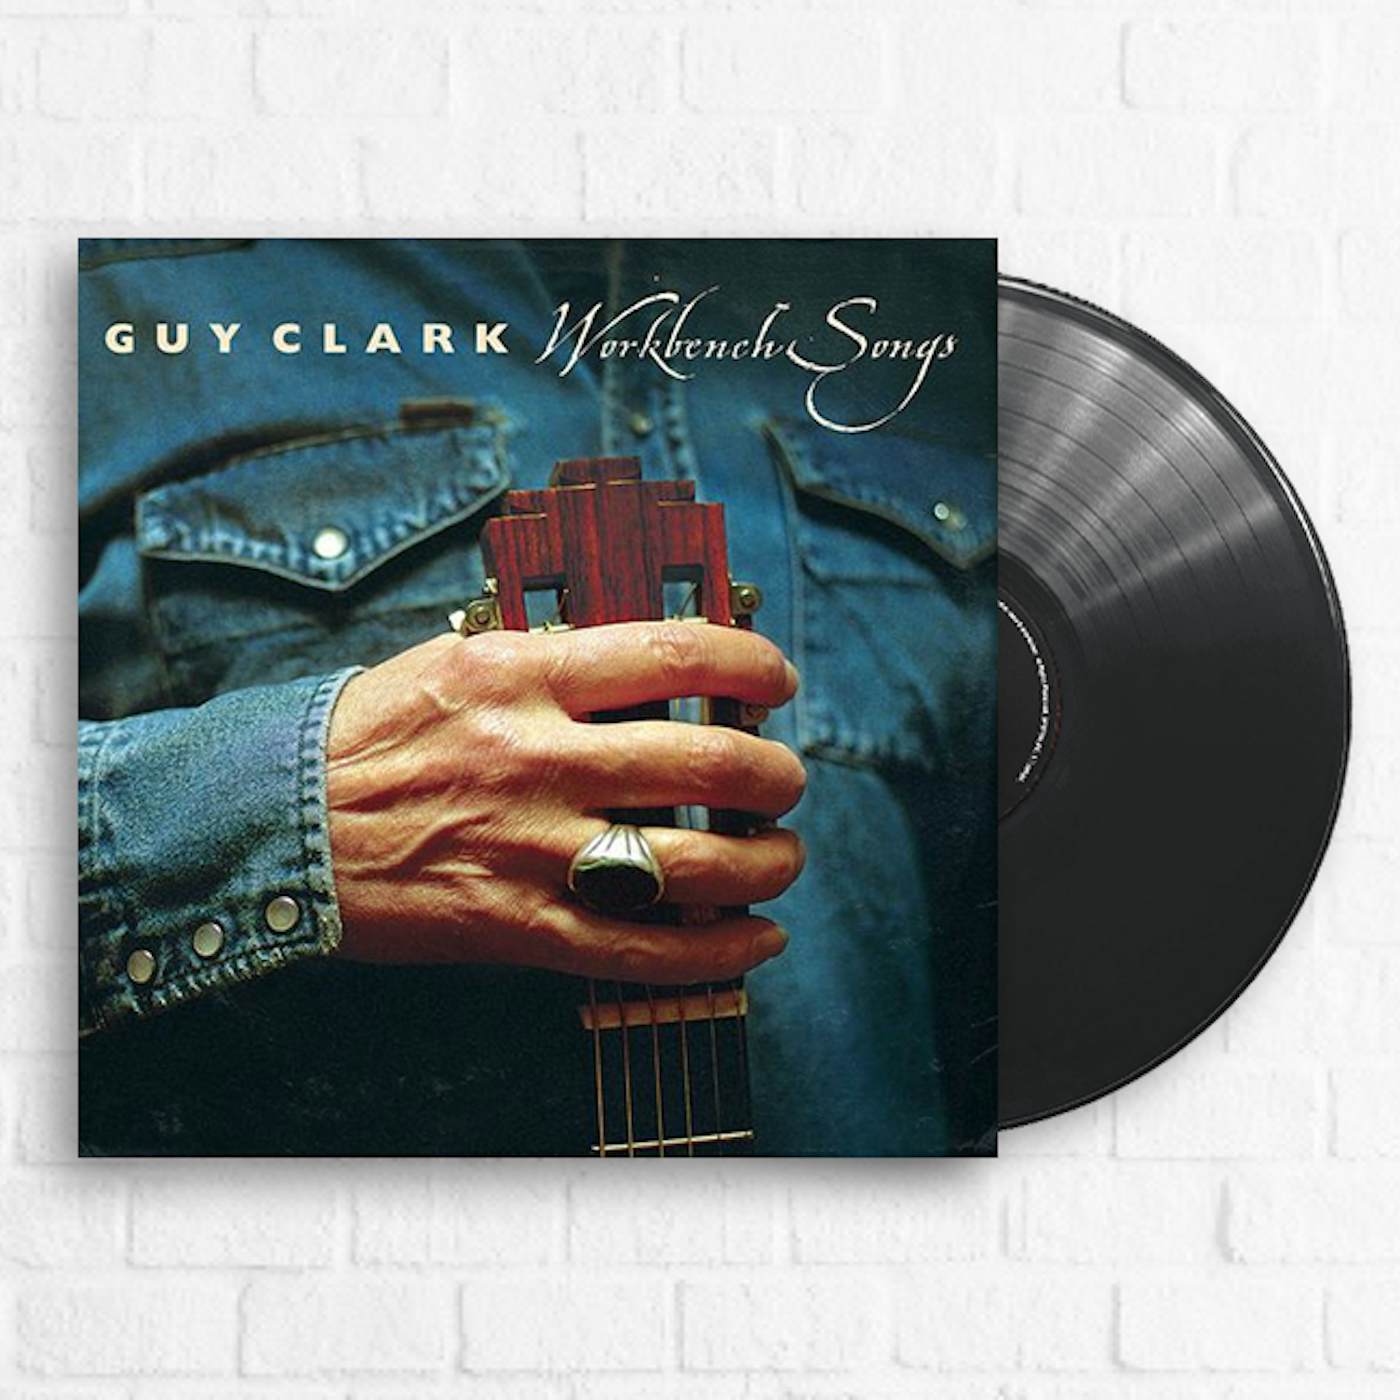 Guy Clark Workbench Songs